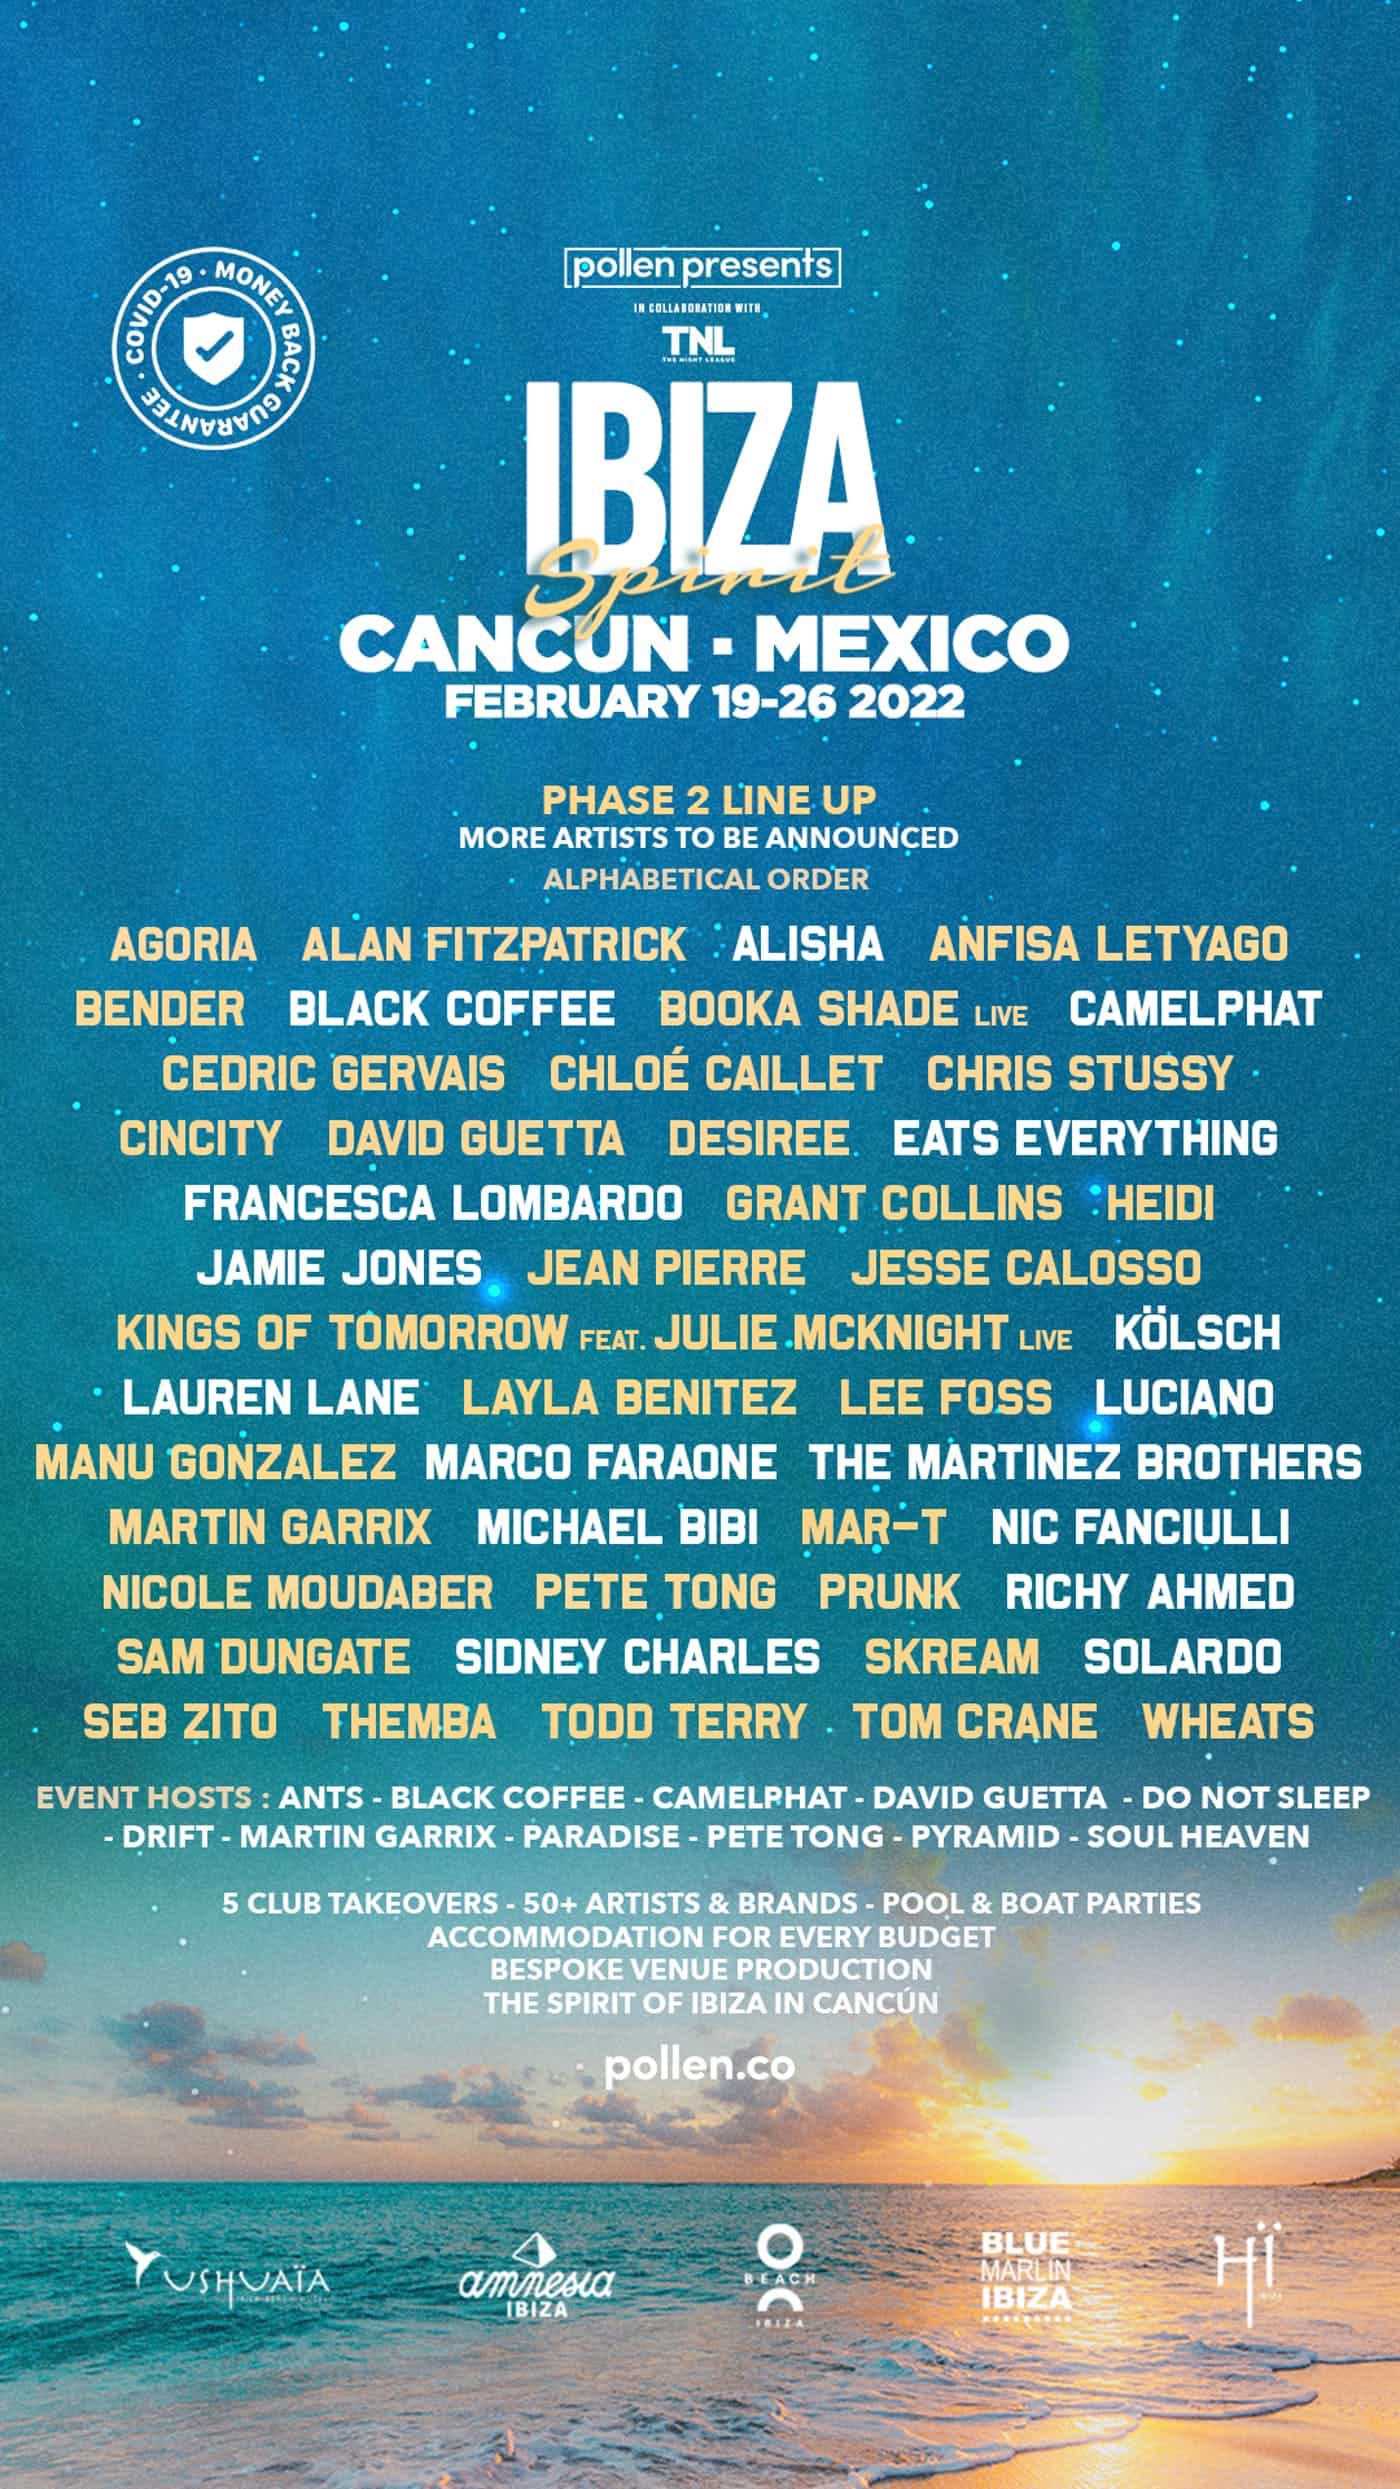 Martin Garrix, David Guetta and more to perform at Cancun's Ibiza Spirit